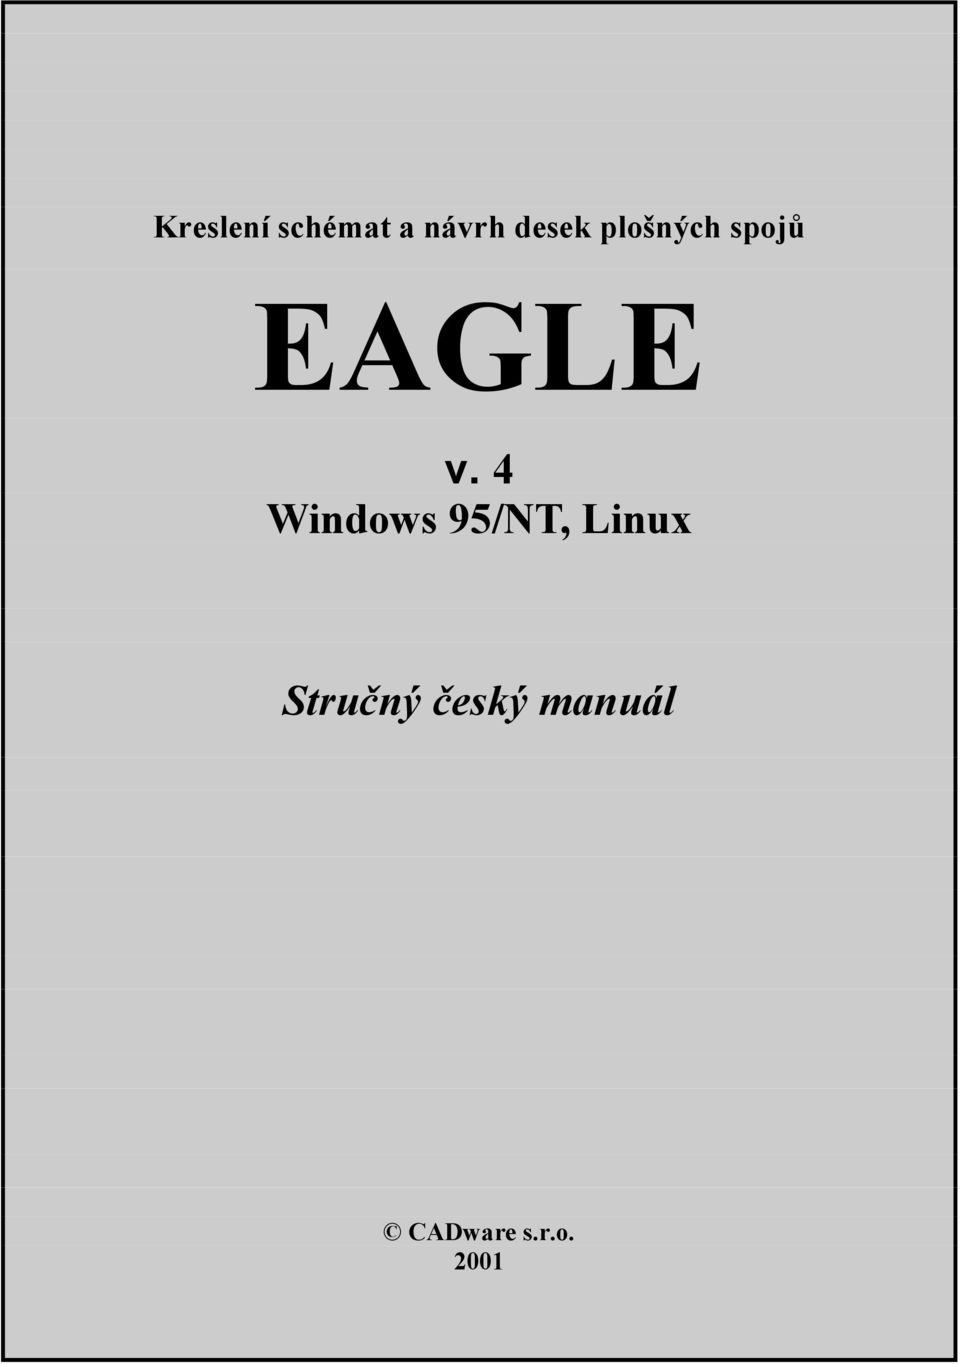 4 Windows 95/NT, Linux